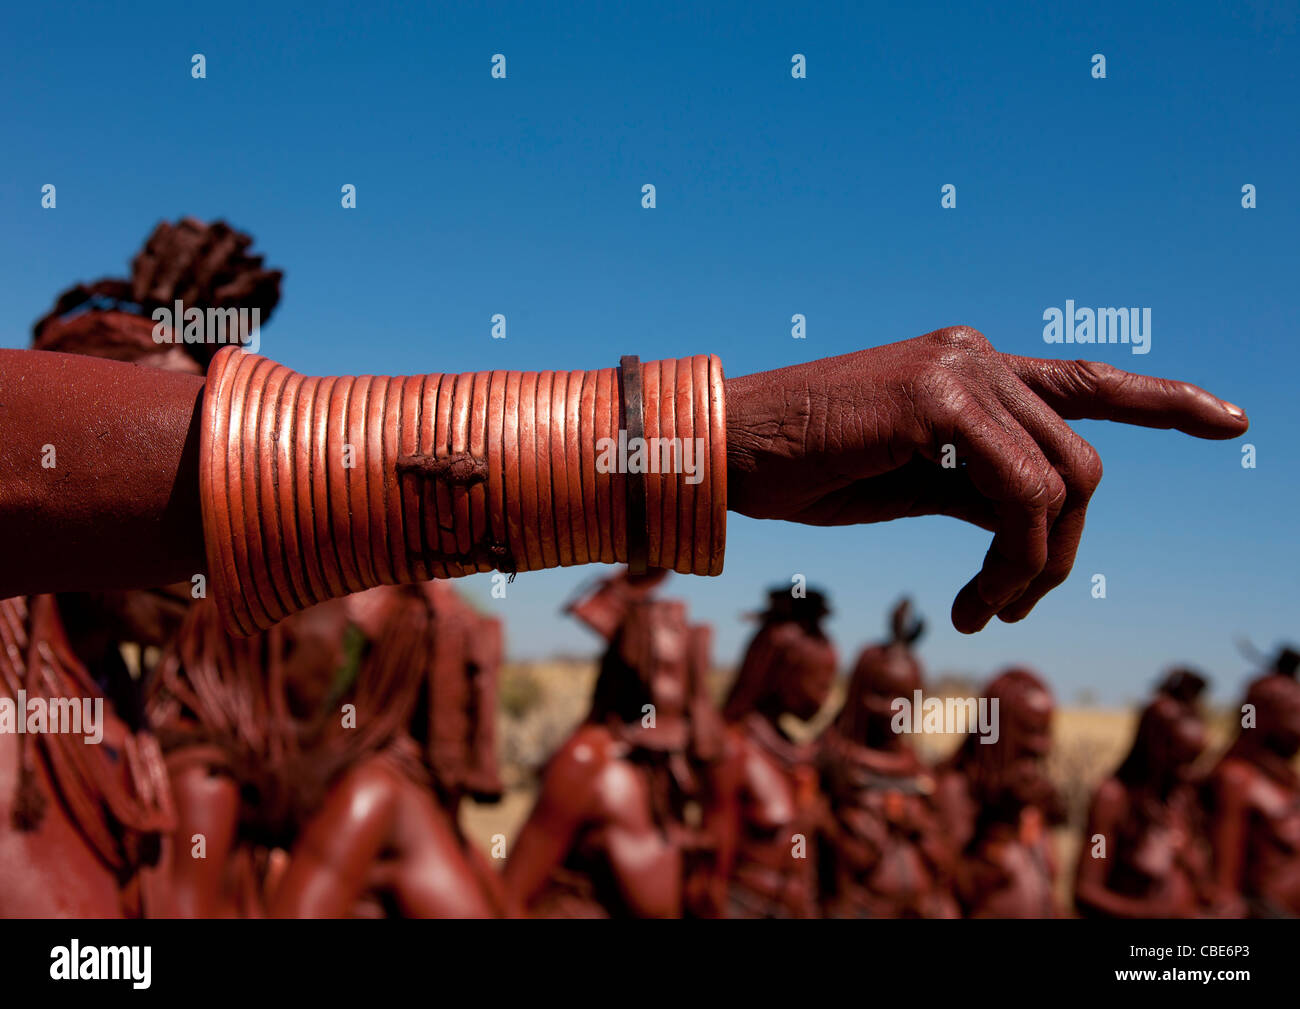 Copper Armband On A Muhimba S Woman Arm, Village Of Elola, Angola Stock Photo